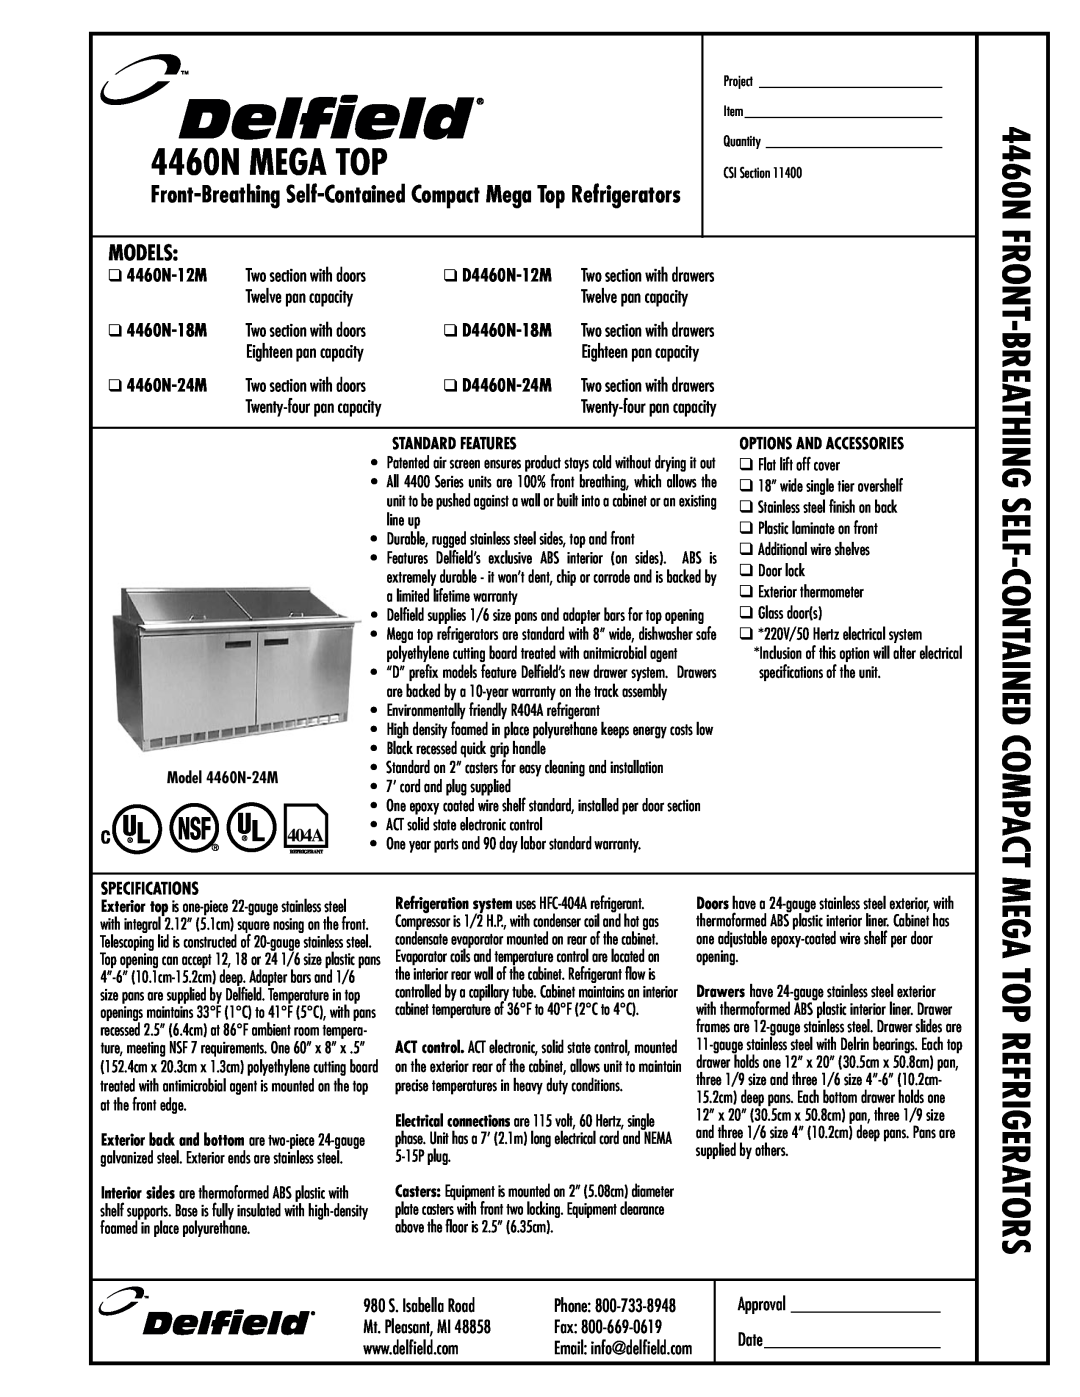 Delfield 4460N-24M manual Models, 4460N MEGA TOP, Mega Top Refrigerators, Self-Contained Compact, Front-Breathing 